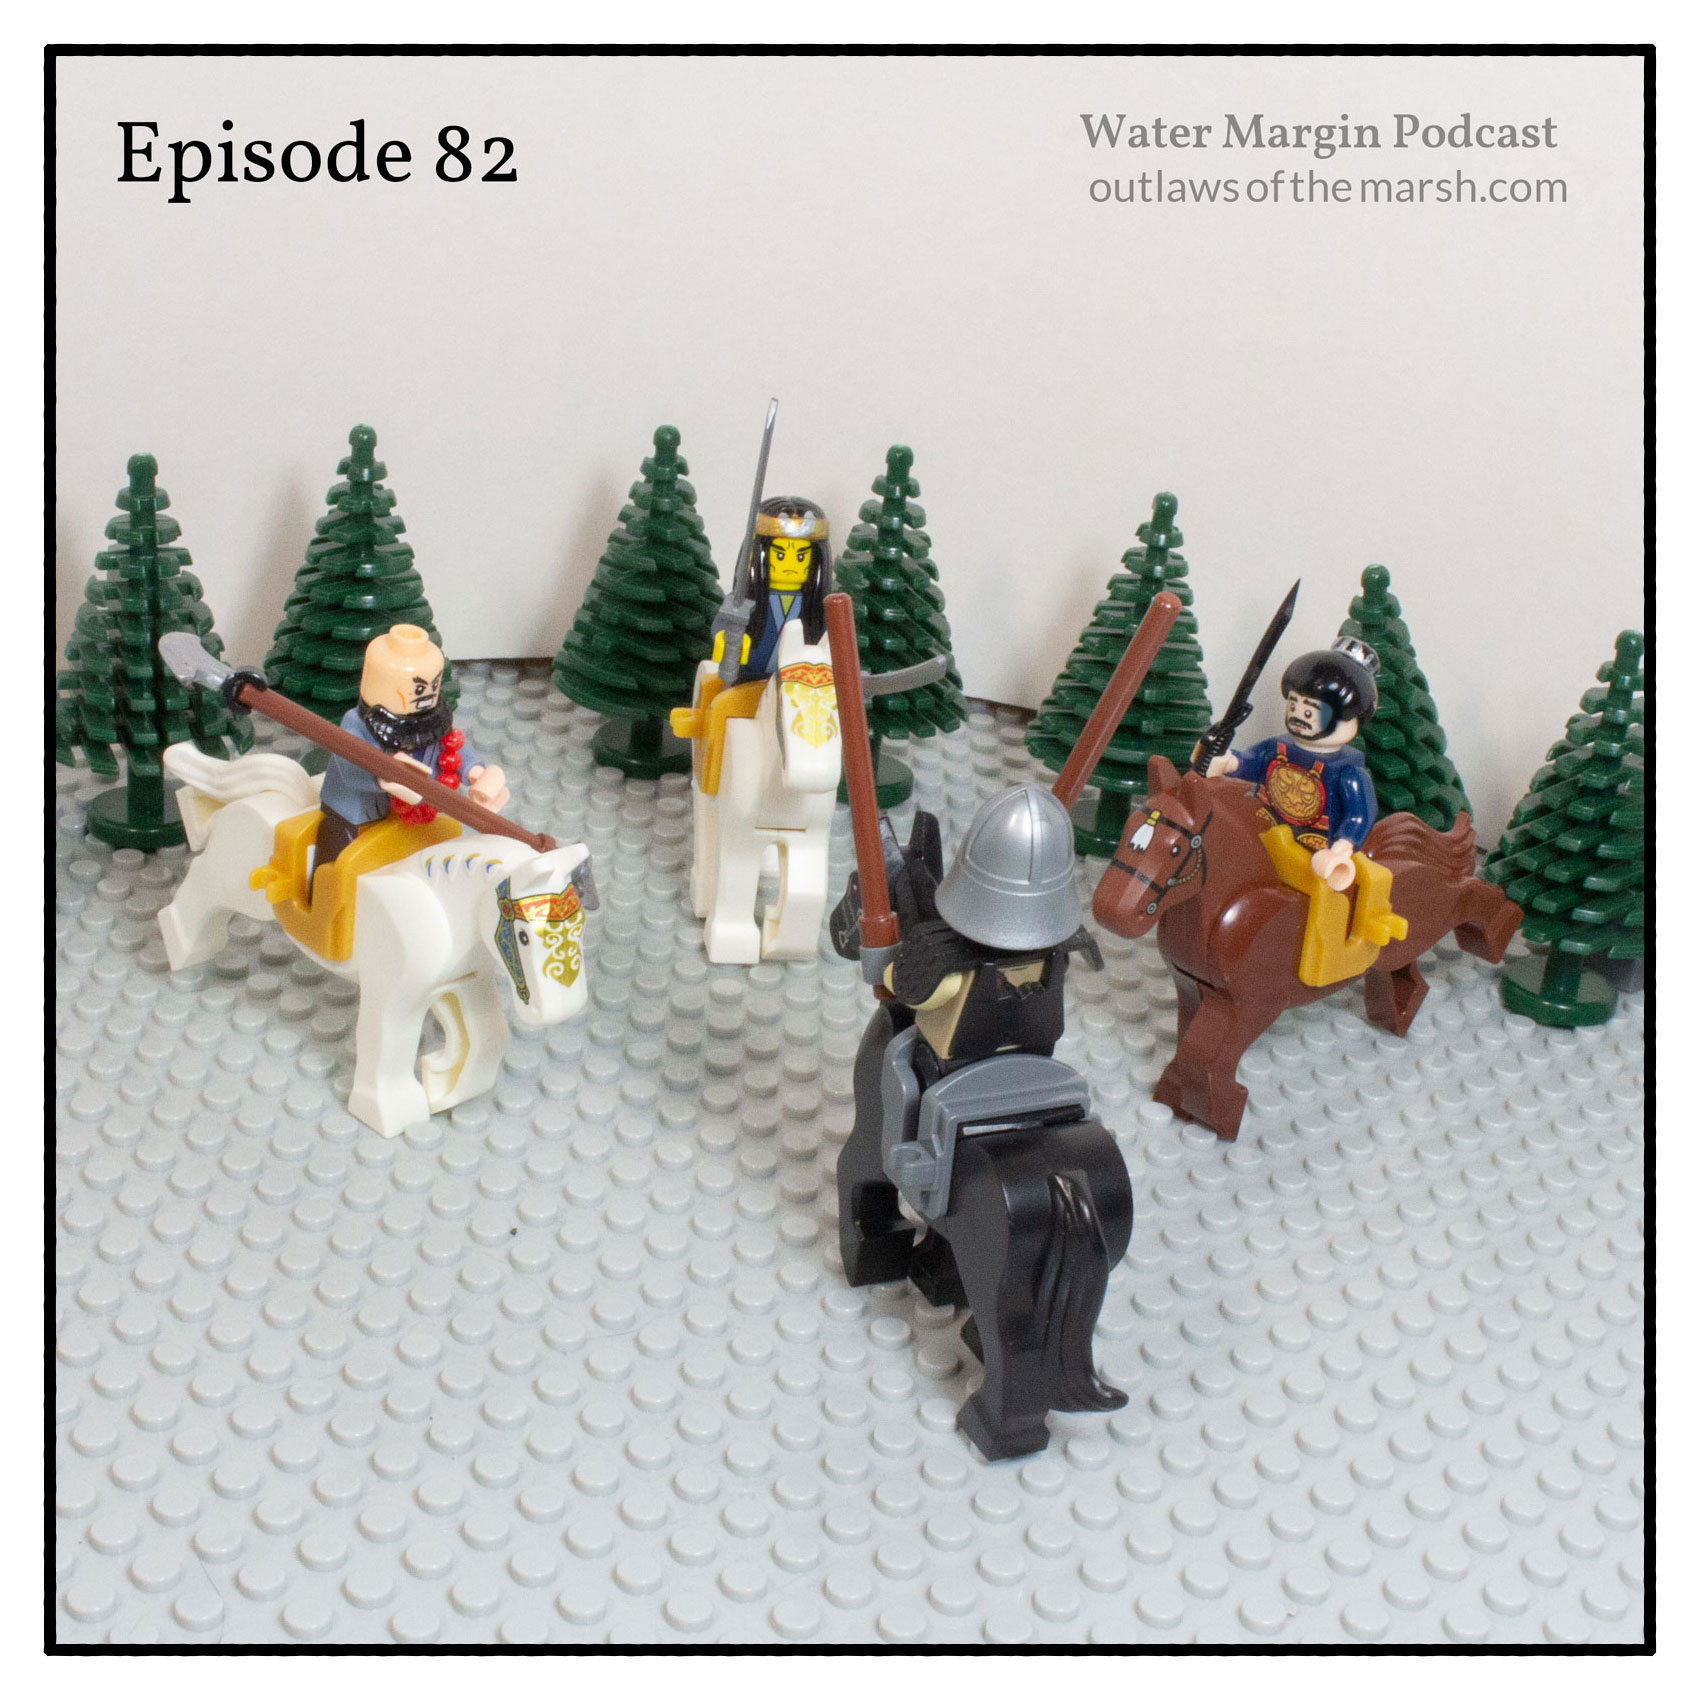 Water Margin Podcast: Episode 82